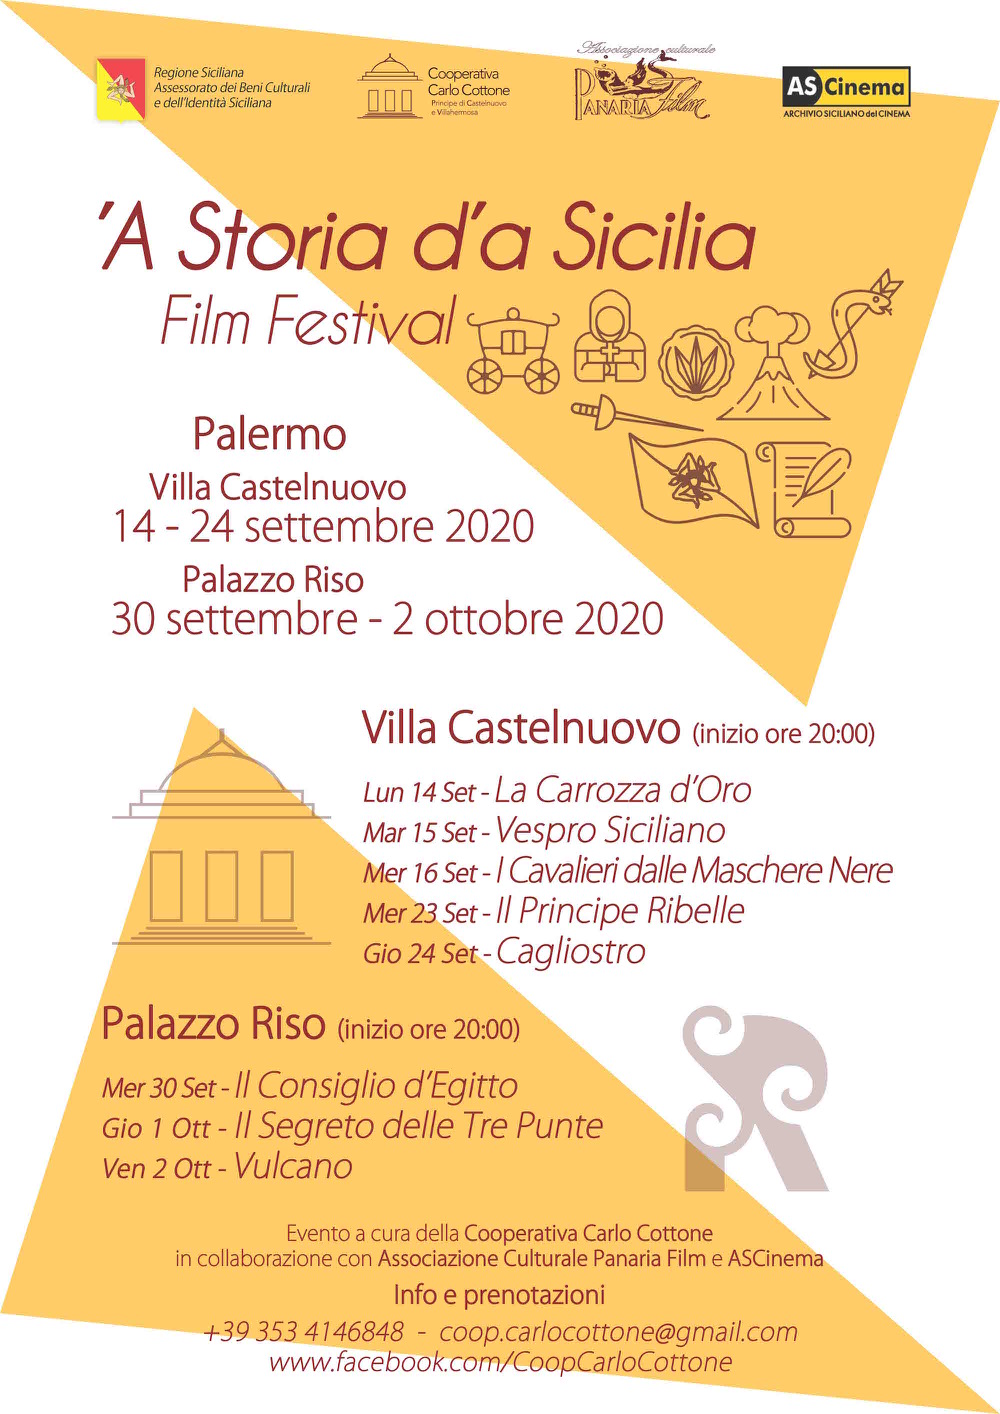 'A Storia d'a Sicilia Film Festival, programma 2020